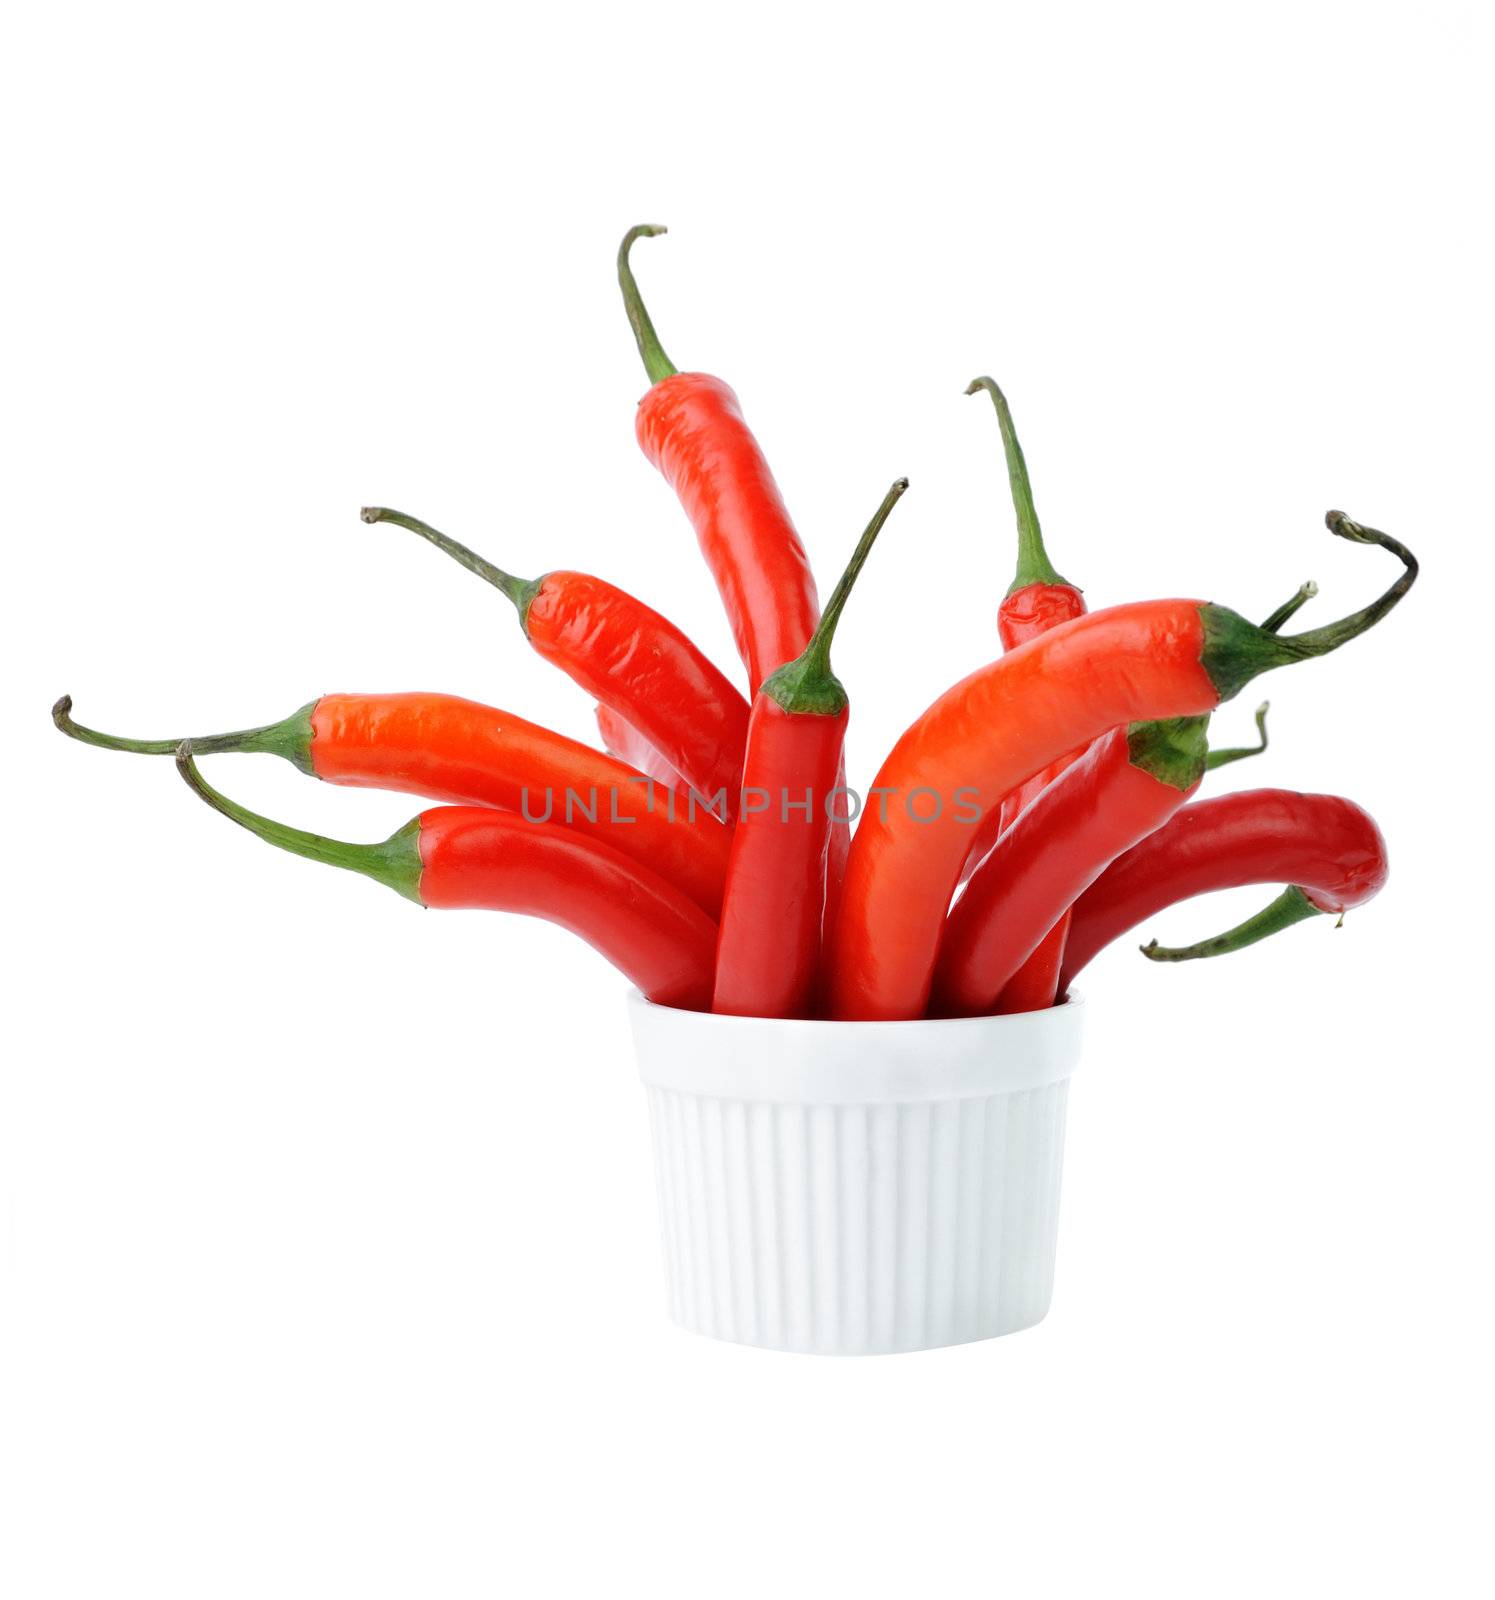 Hot chillies by velkol